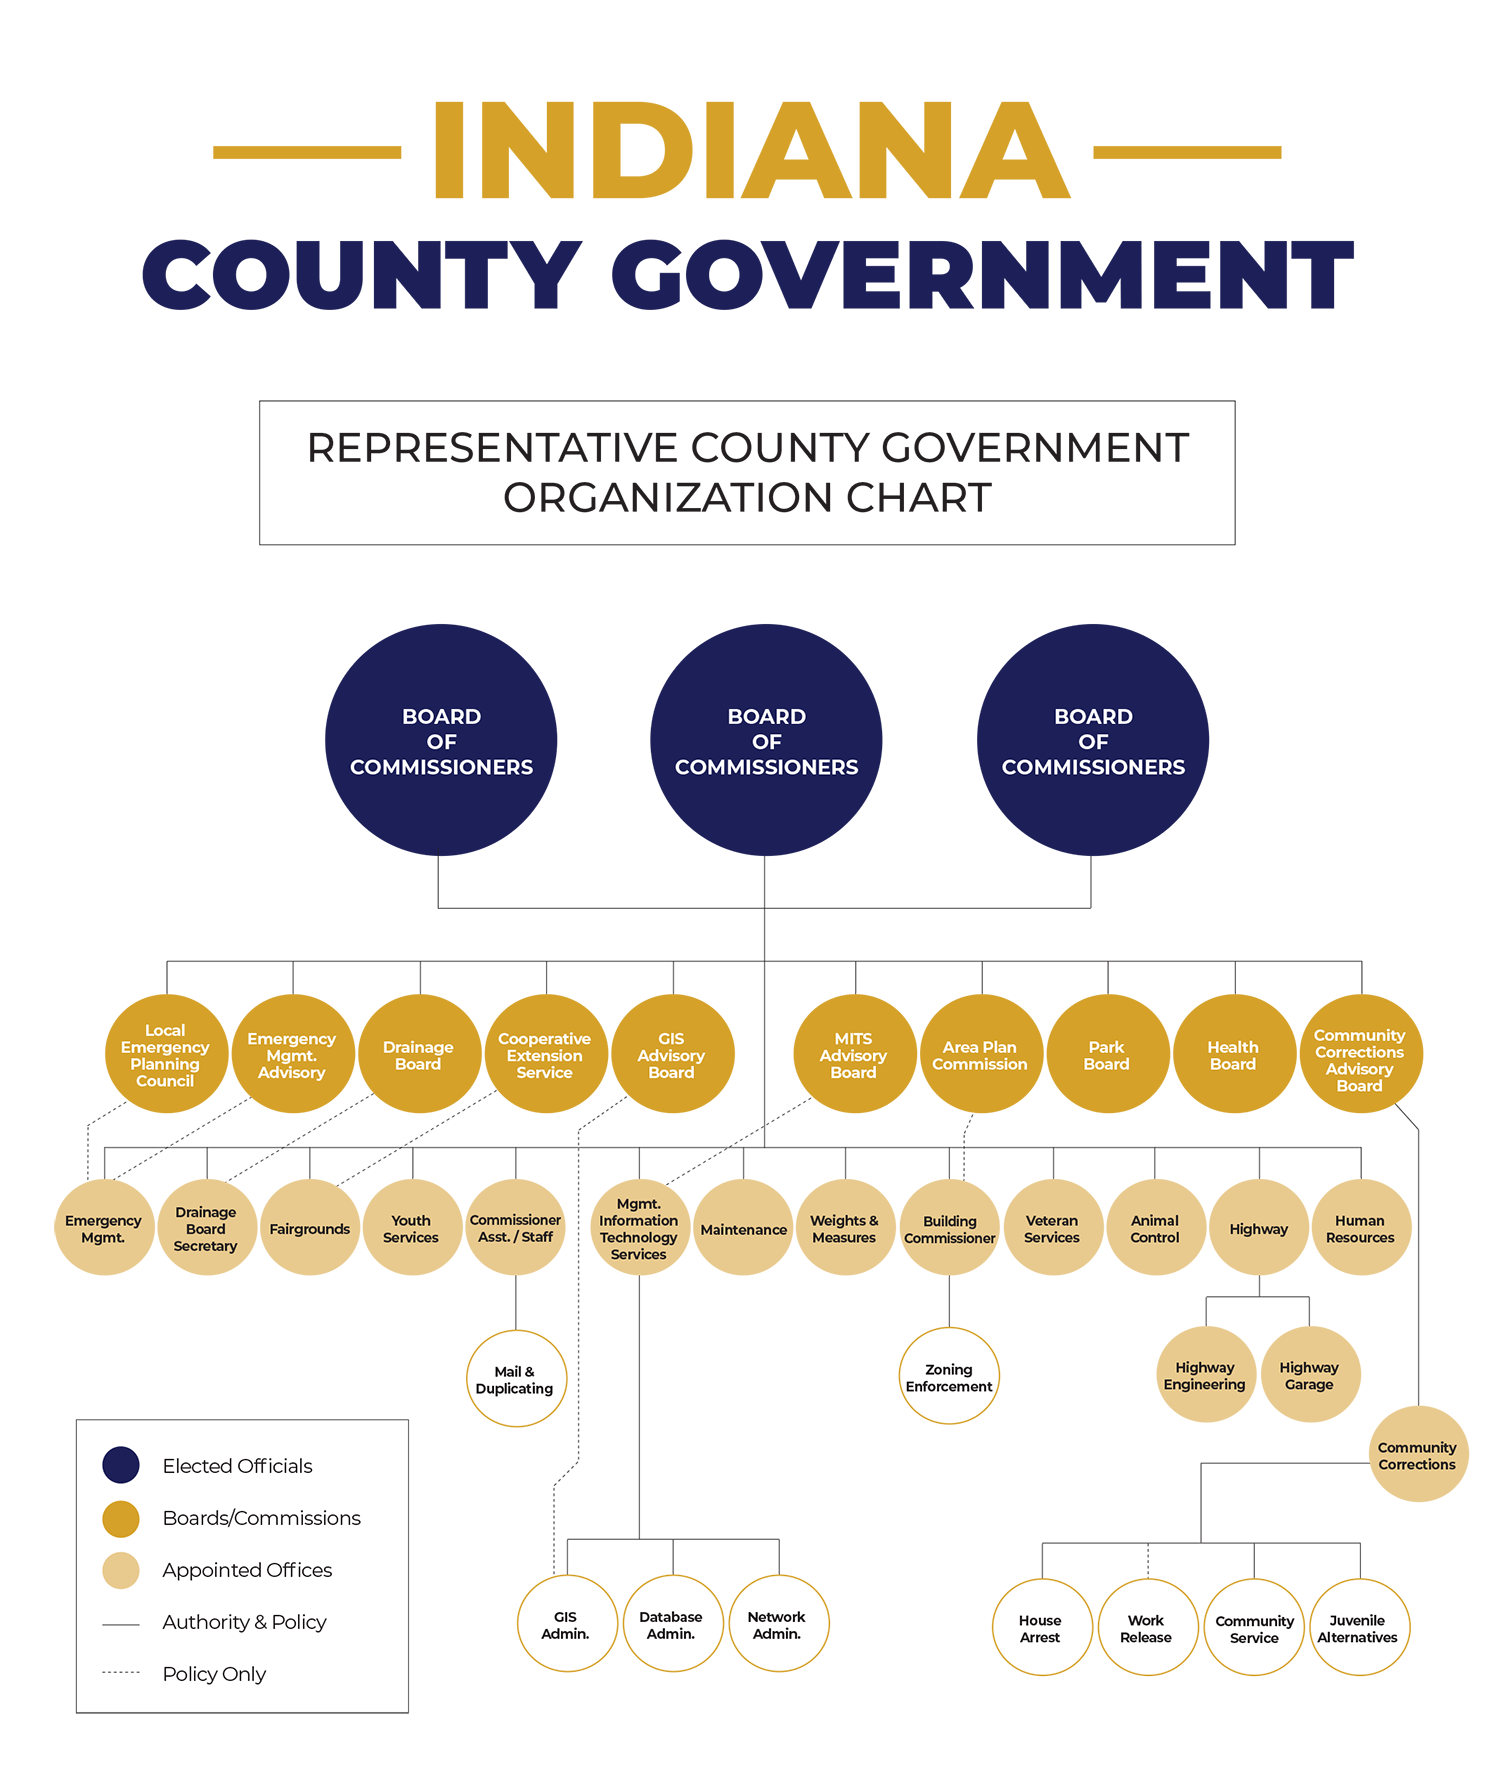 Indiana County Government Organization Chart